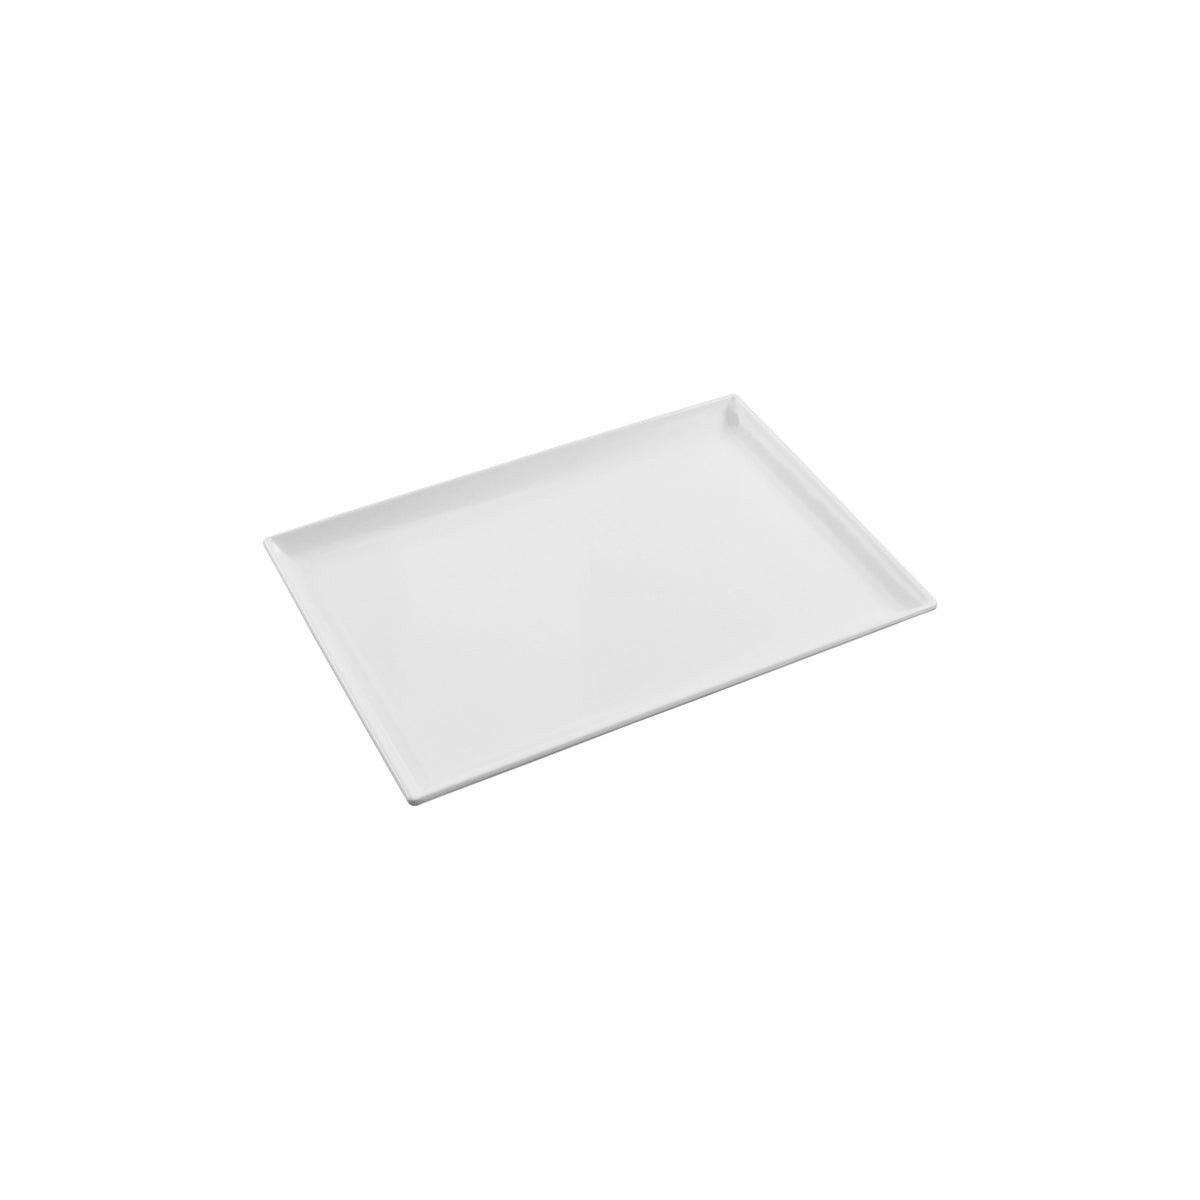 49028 Superware White Rectangular Platter 300x200mm Tomkin Australia Hospitality Supplies